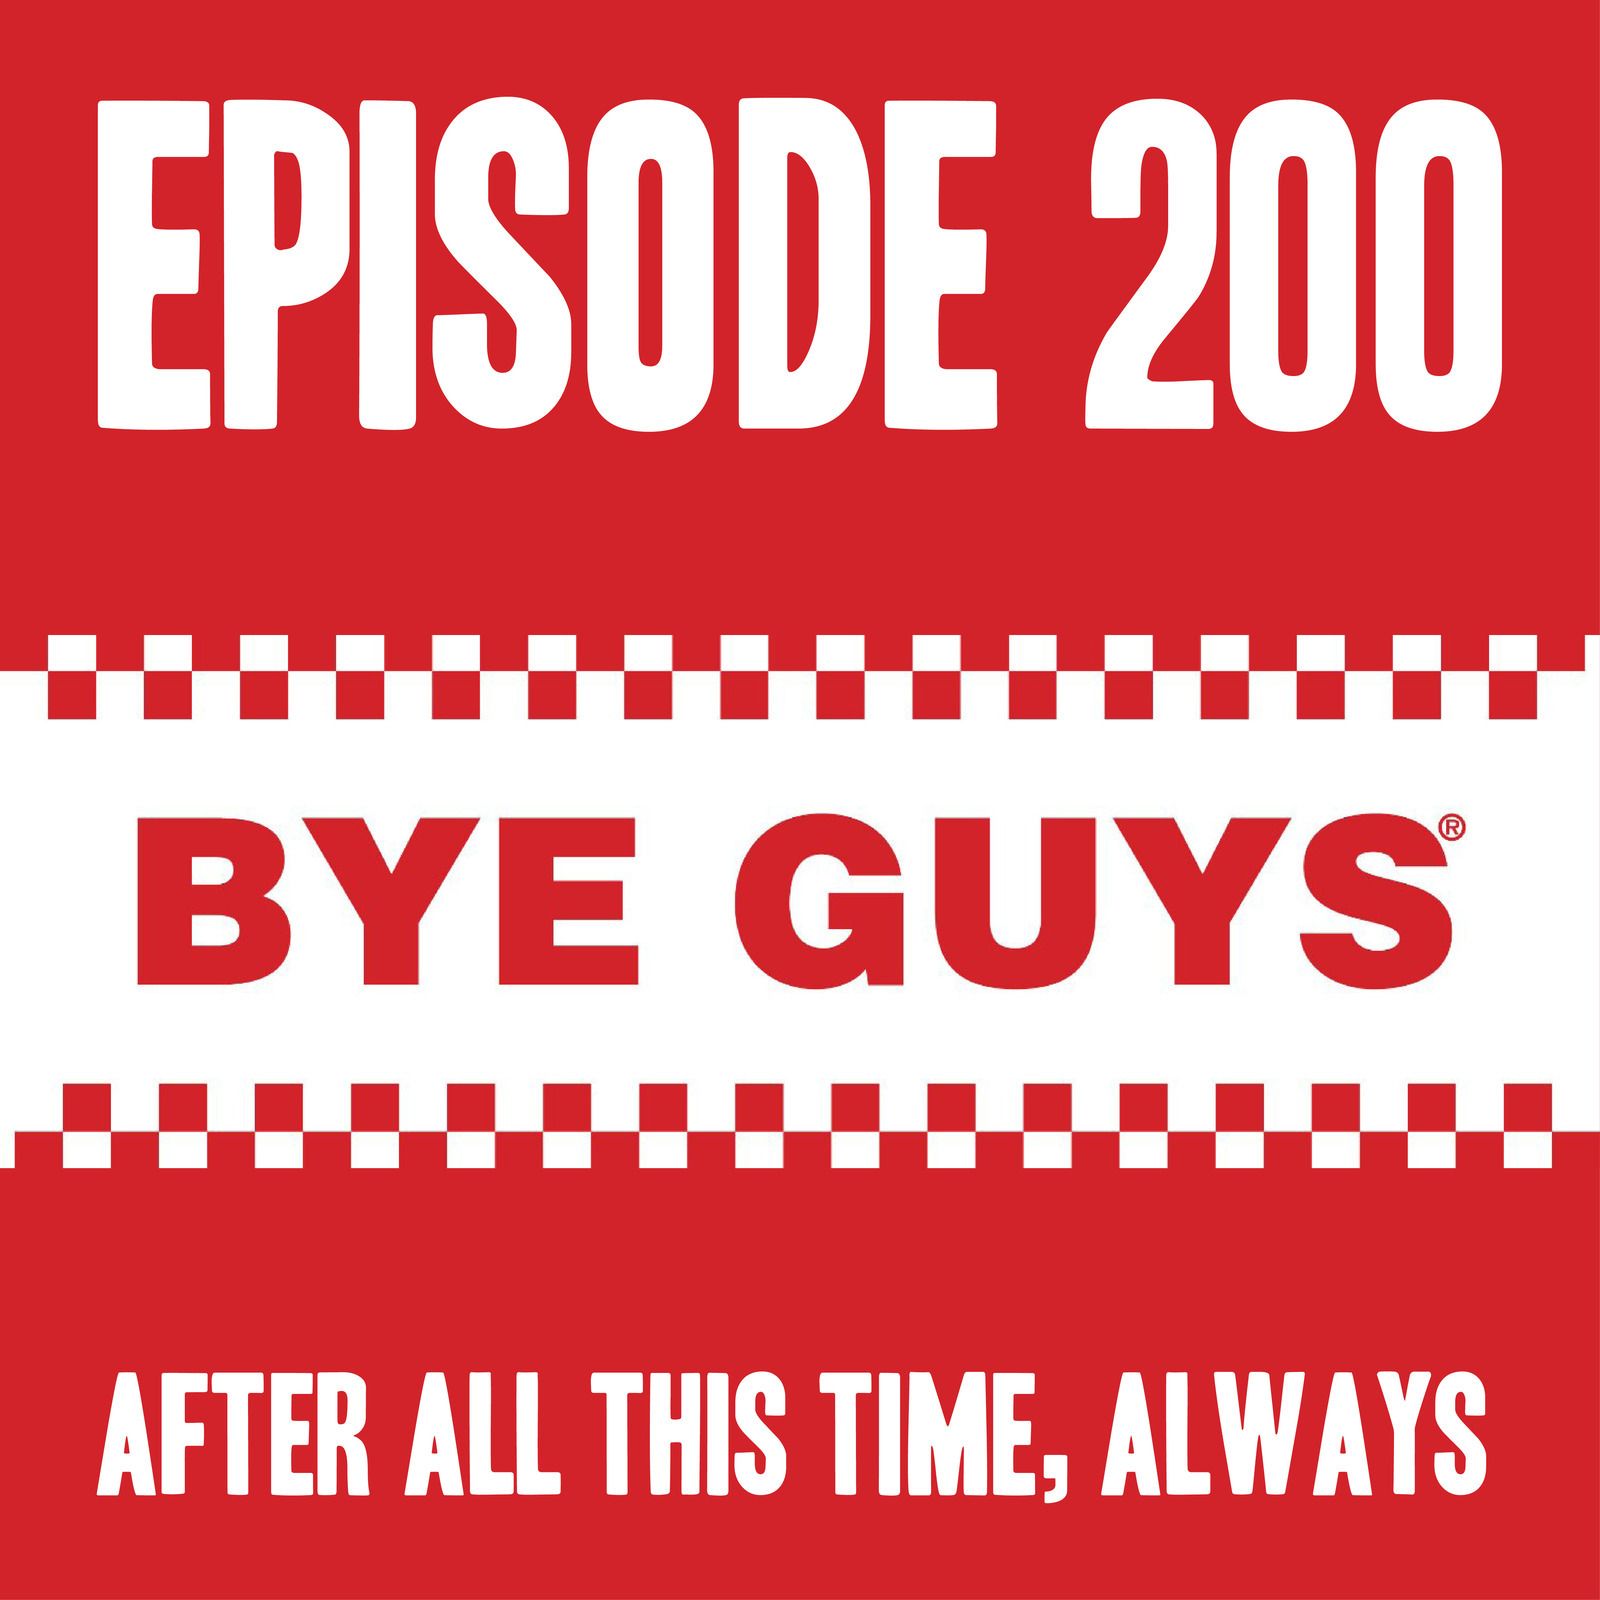 Episode 200: Bye guys.